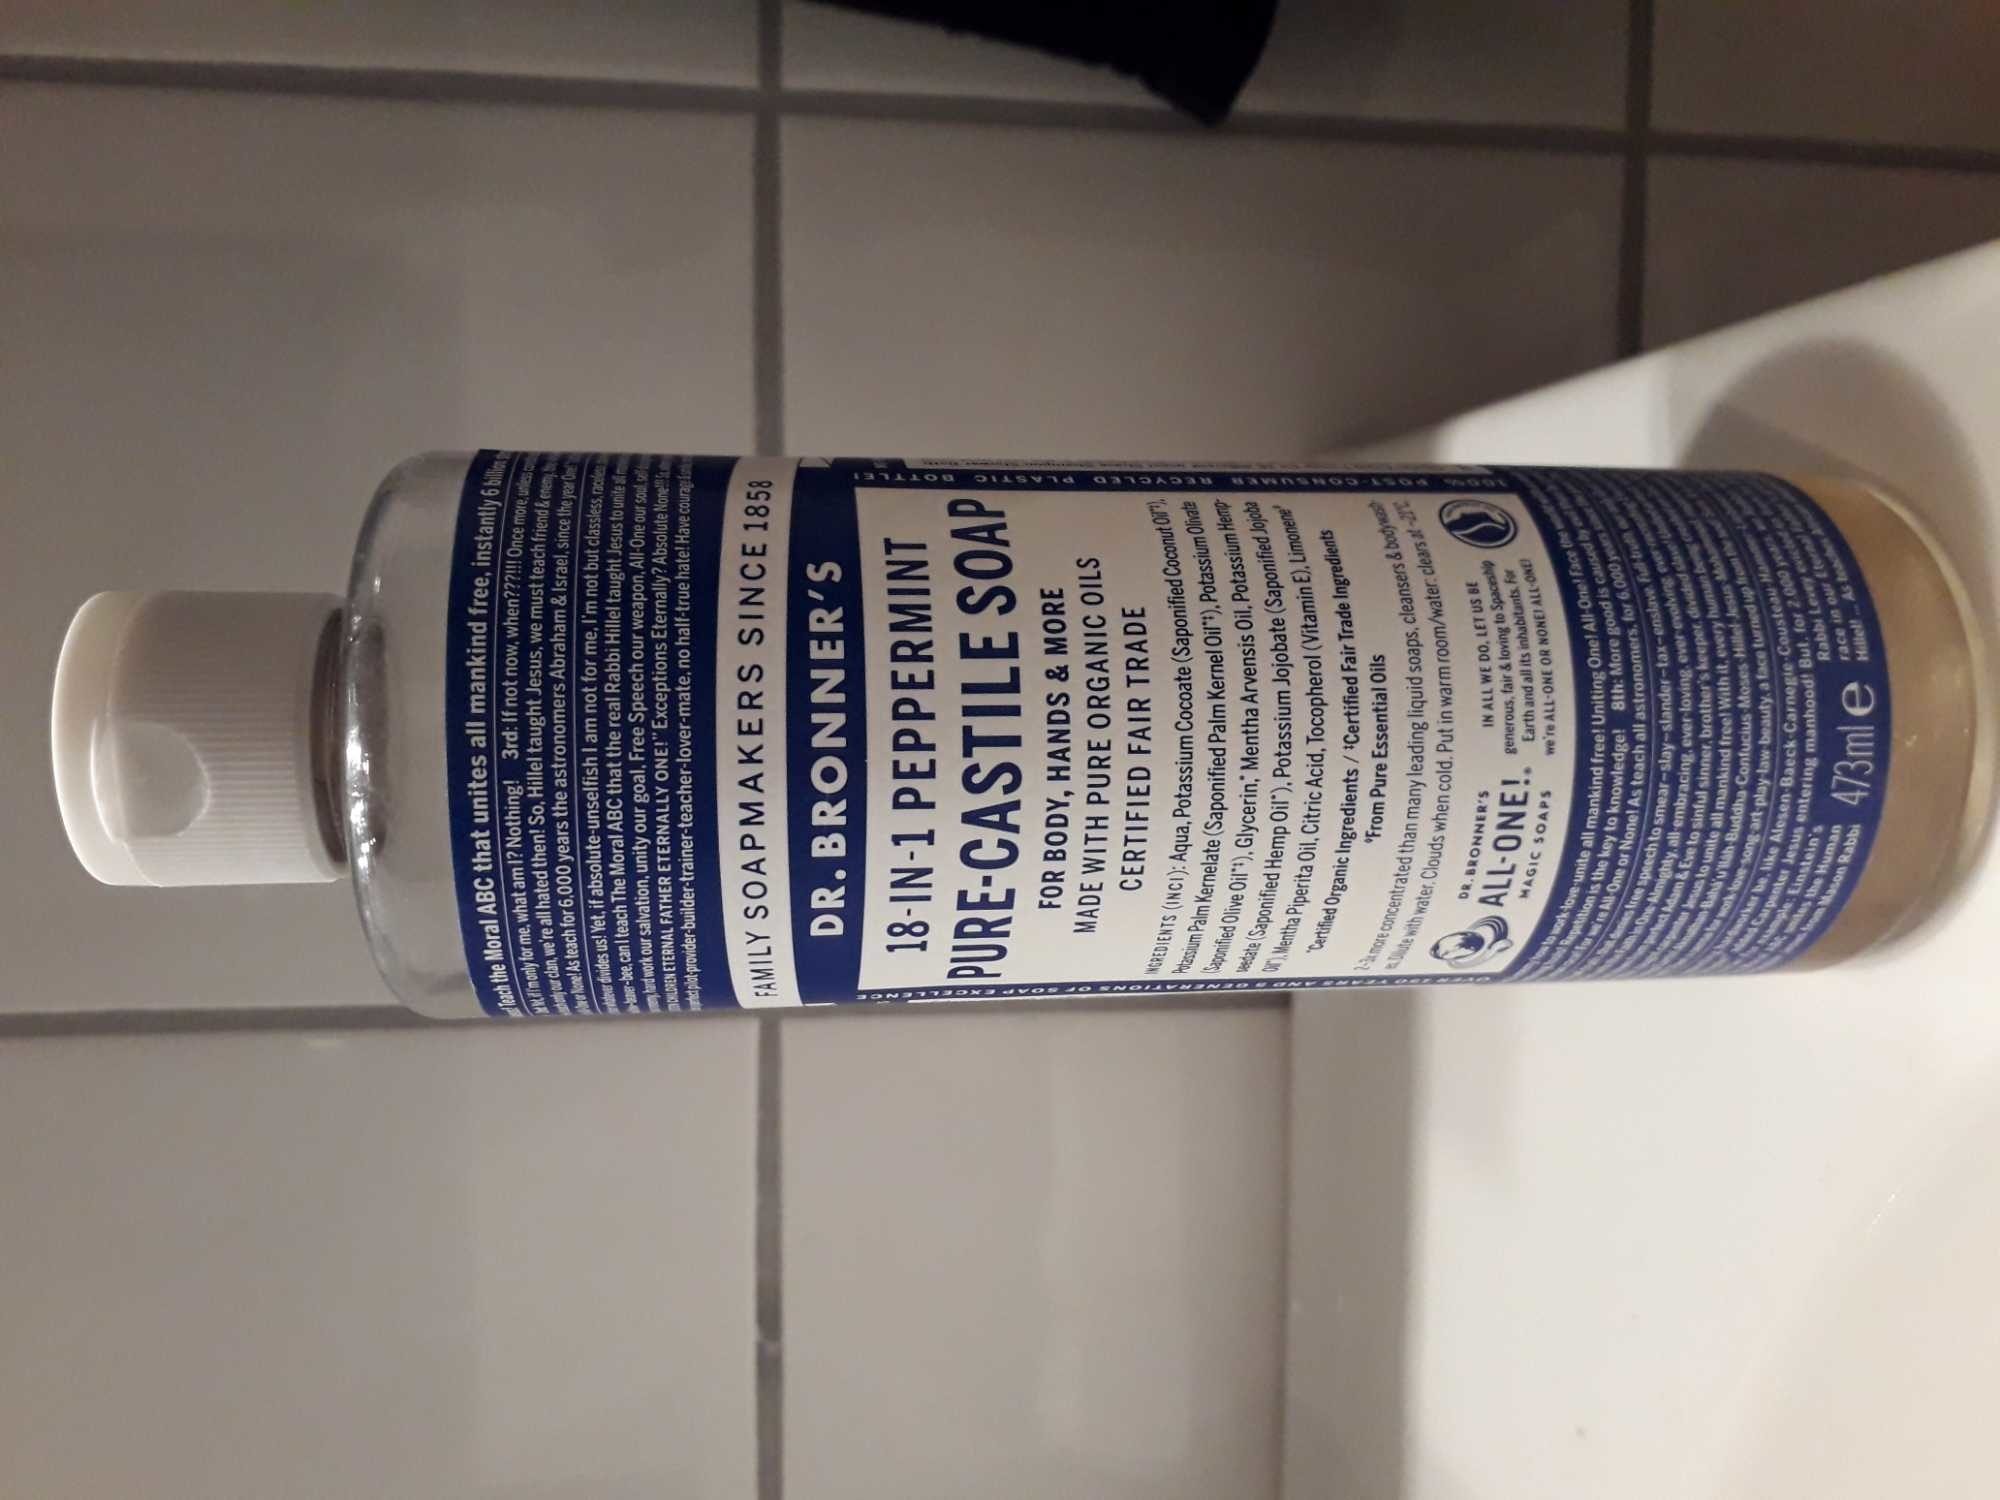 PURE-CASTILE SOAP 18-in-1 Peppermint - Produto - en